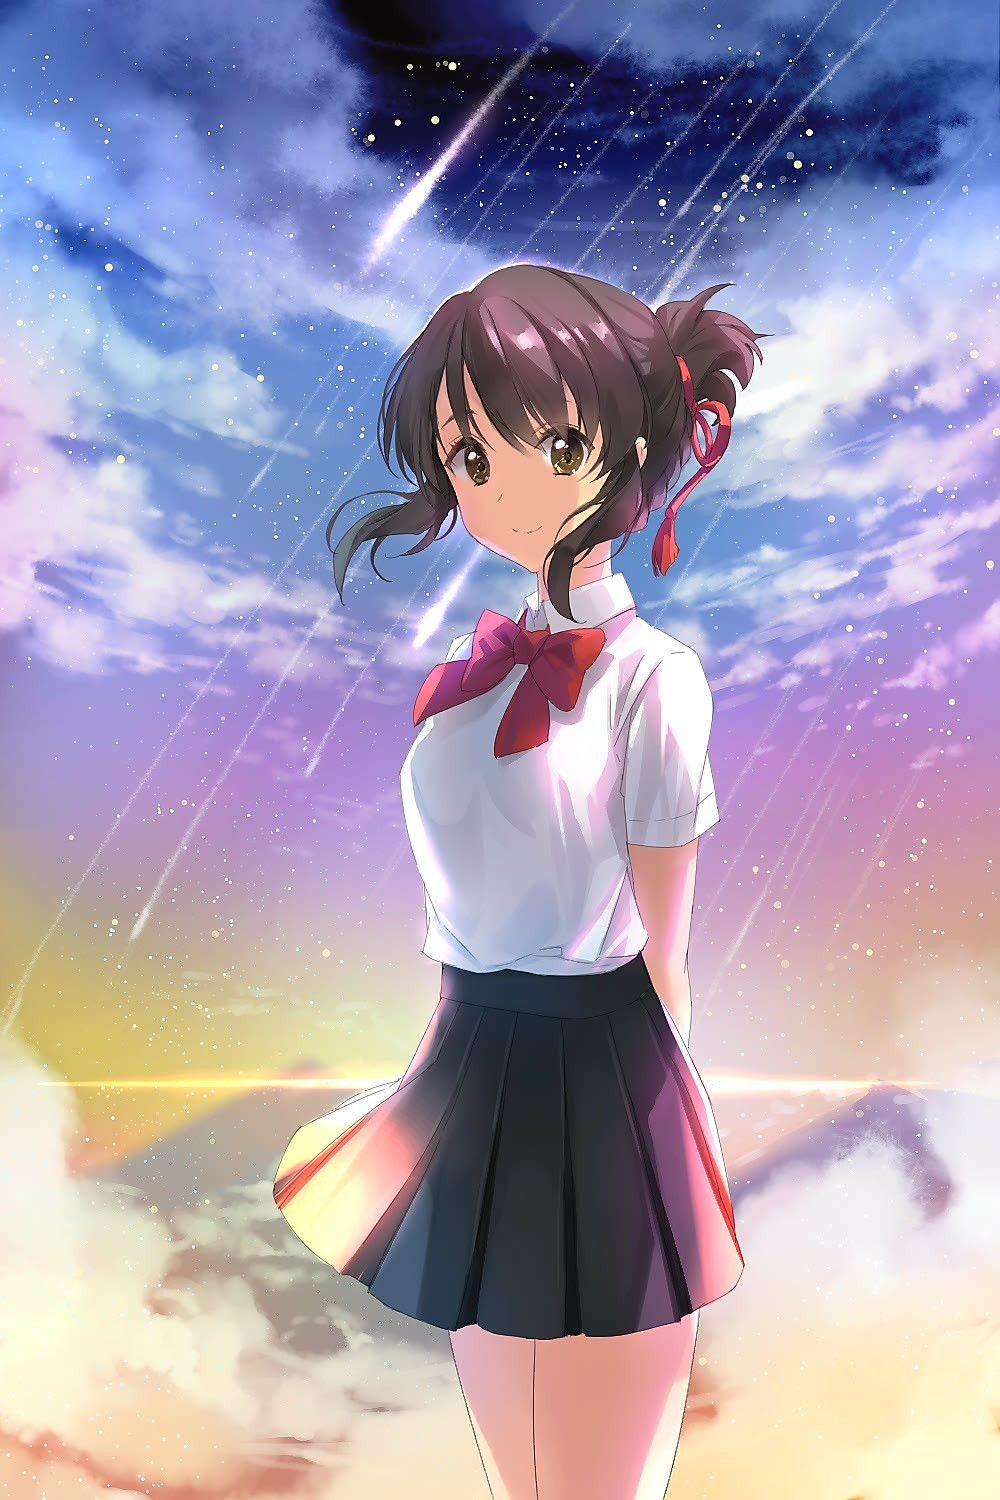 Download wallpaper 1280x1280 schoolgirl uniform clouds twilight anime  ipad ipad 2 ipad mini for parallax hd background